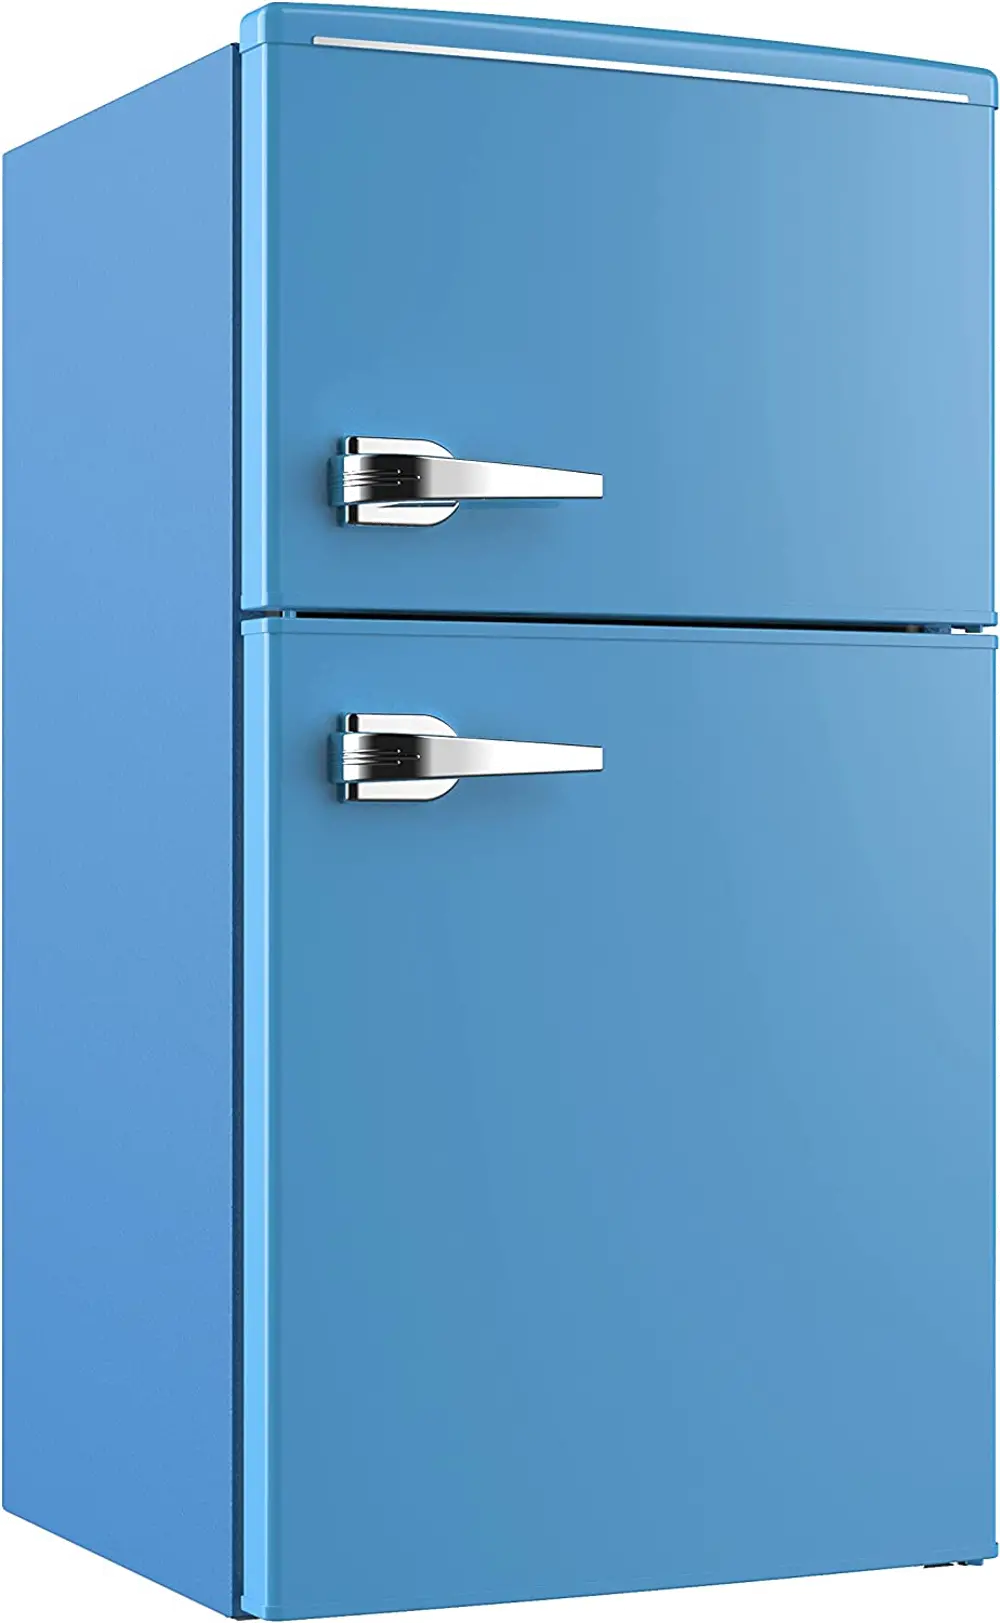 RMRT30X6BL-IS Avanti 3.0 cu ft Retro Refrigerator with Freezer - Blue-1